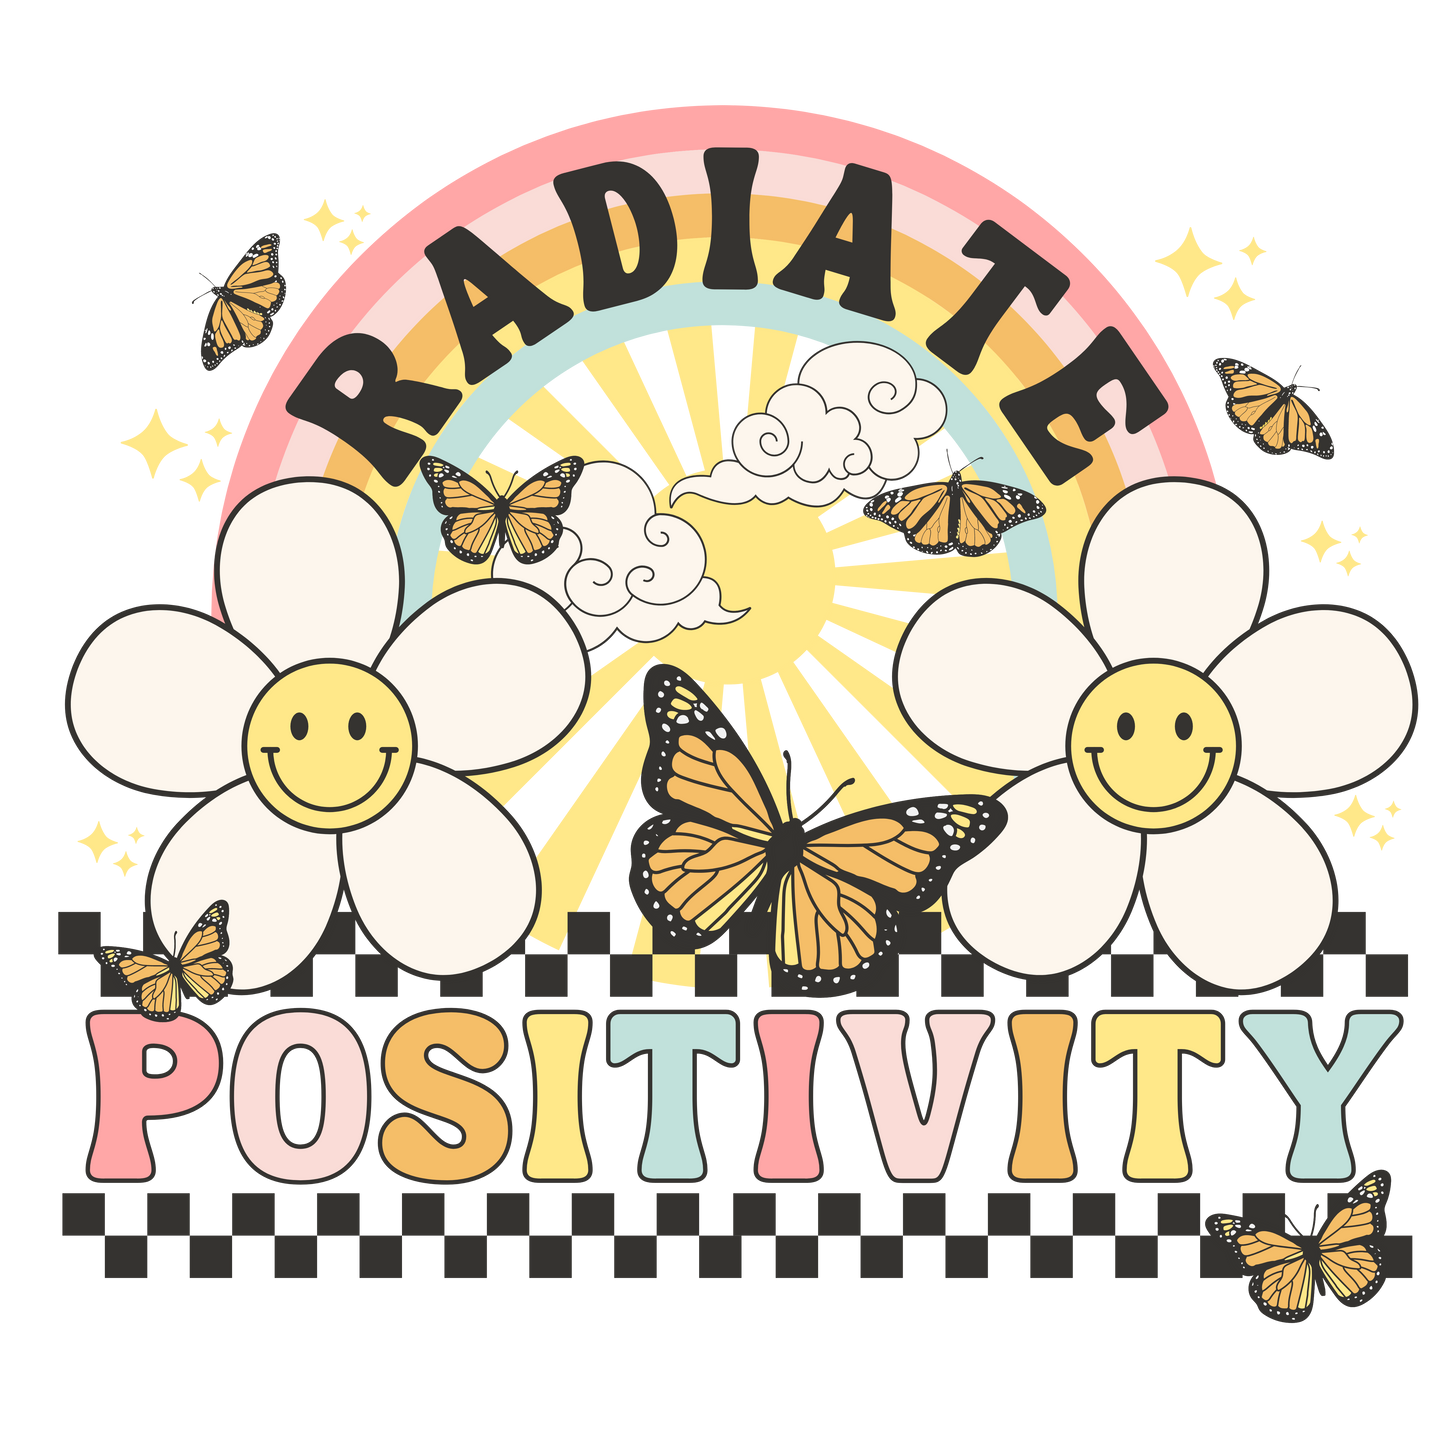 Radiate Positivity Logo